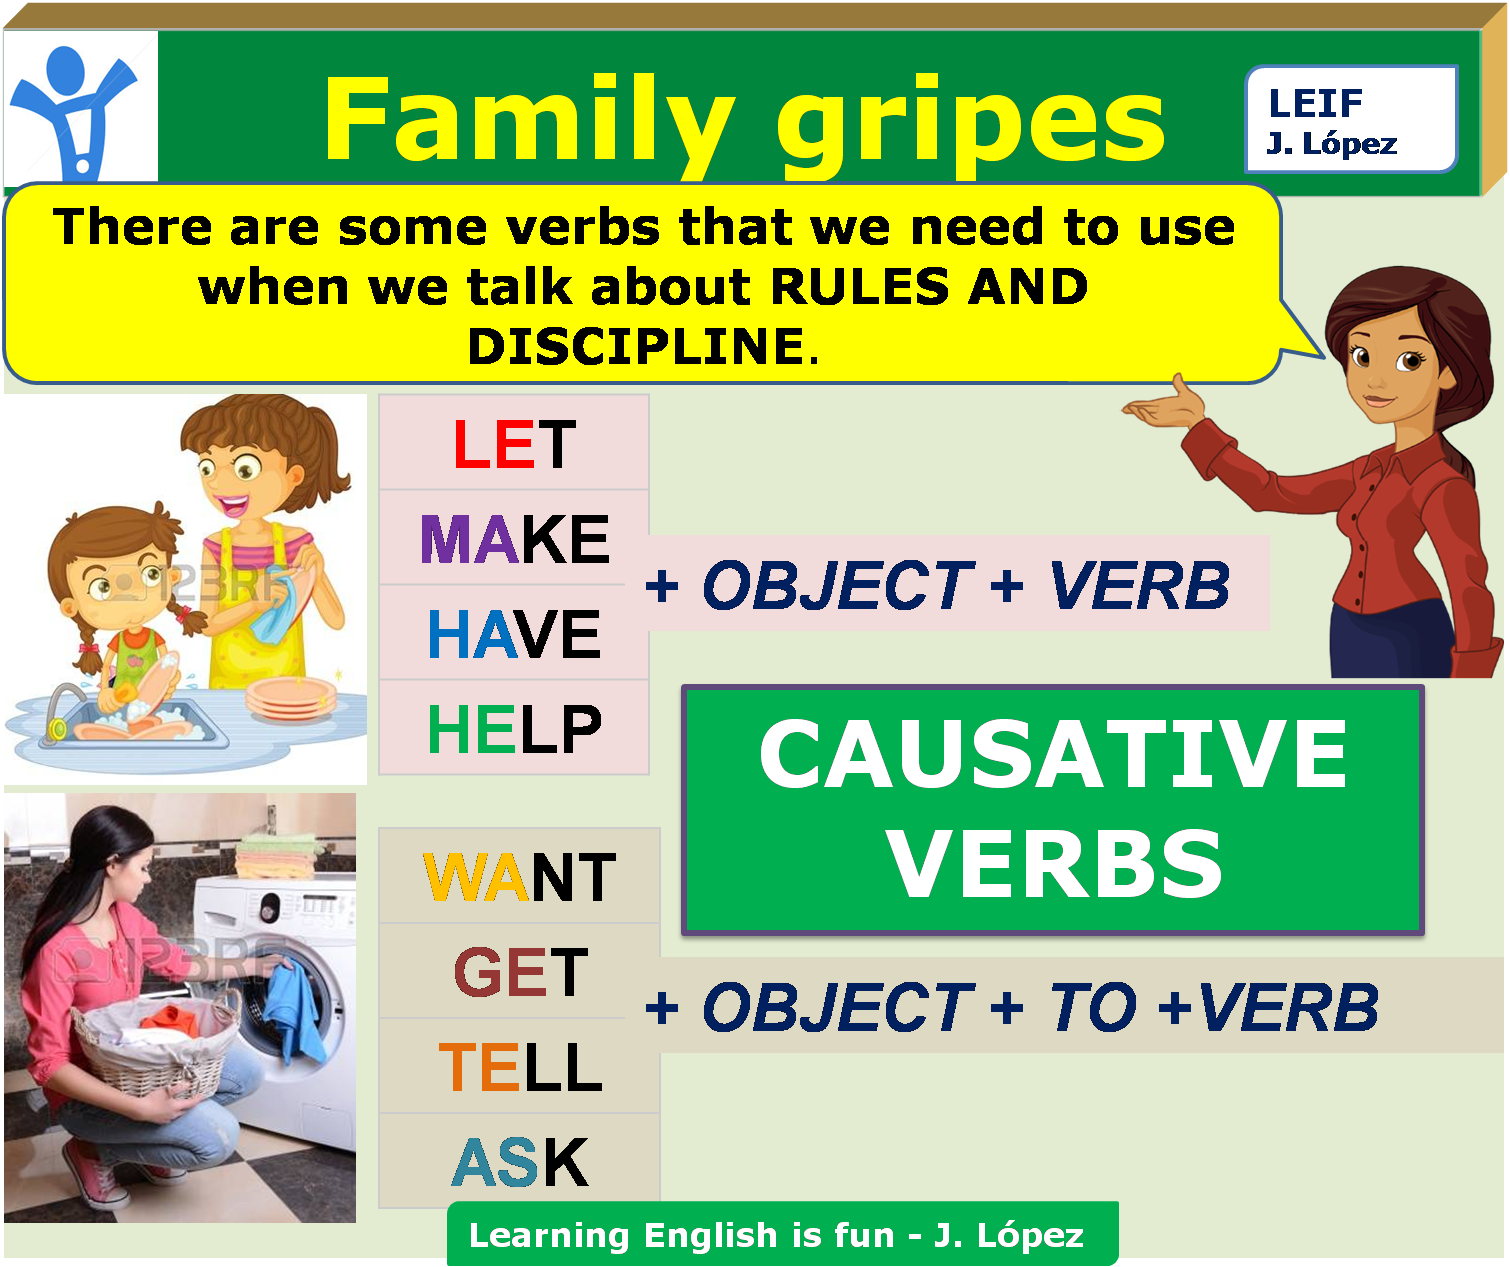 Causative verbs. Make get have правило. Causative verbs в английском языке. Каузативные глаголы.